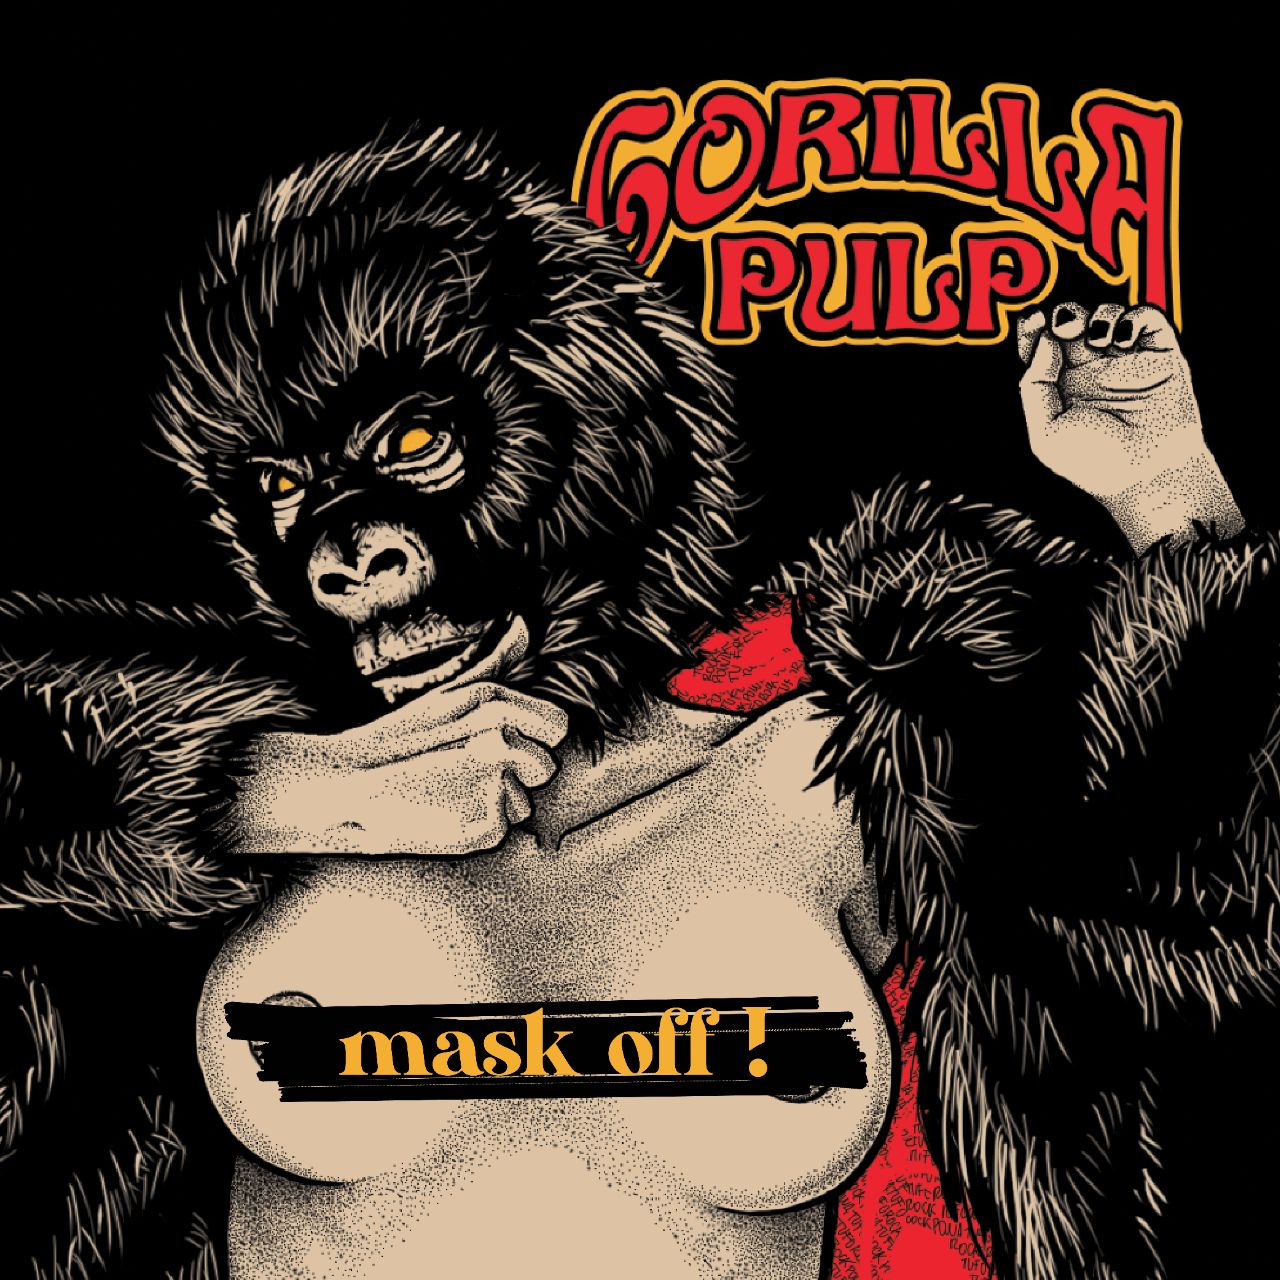 Gorilla Pulp